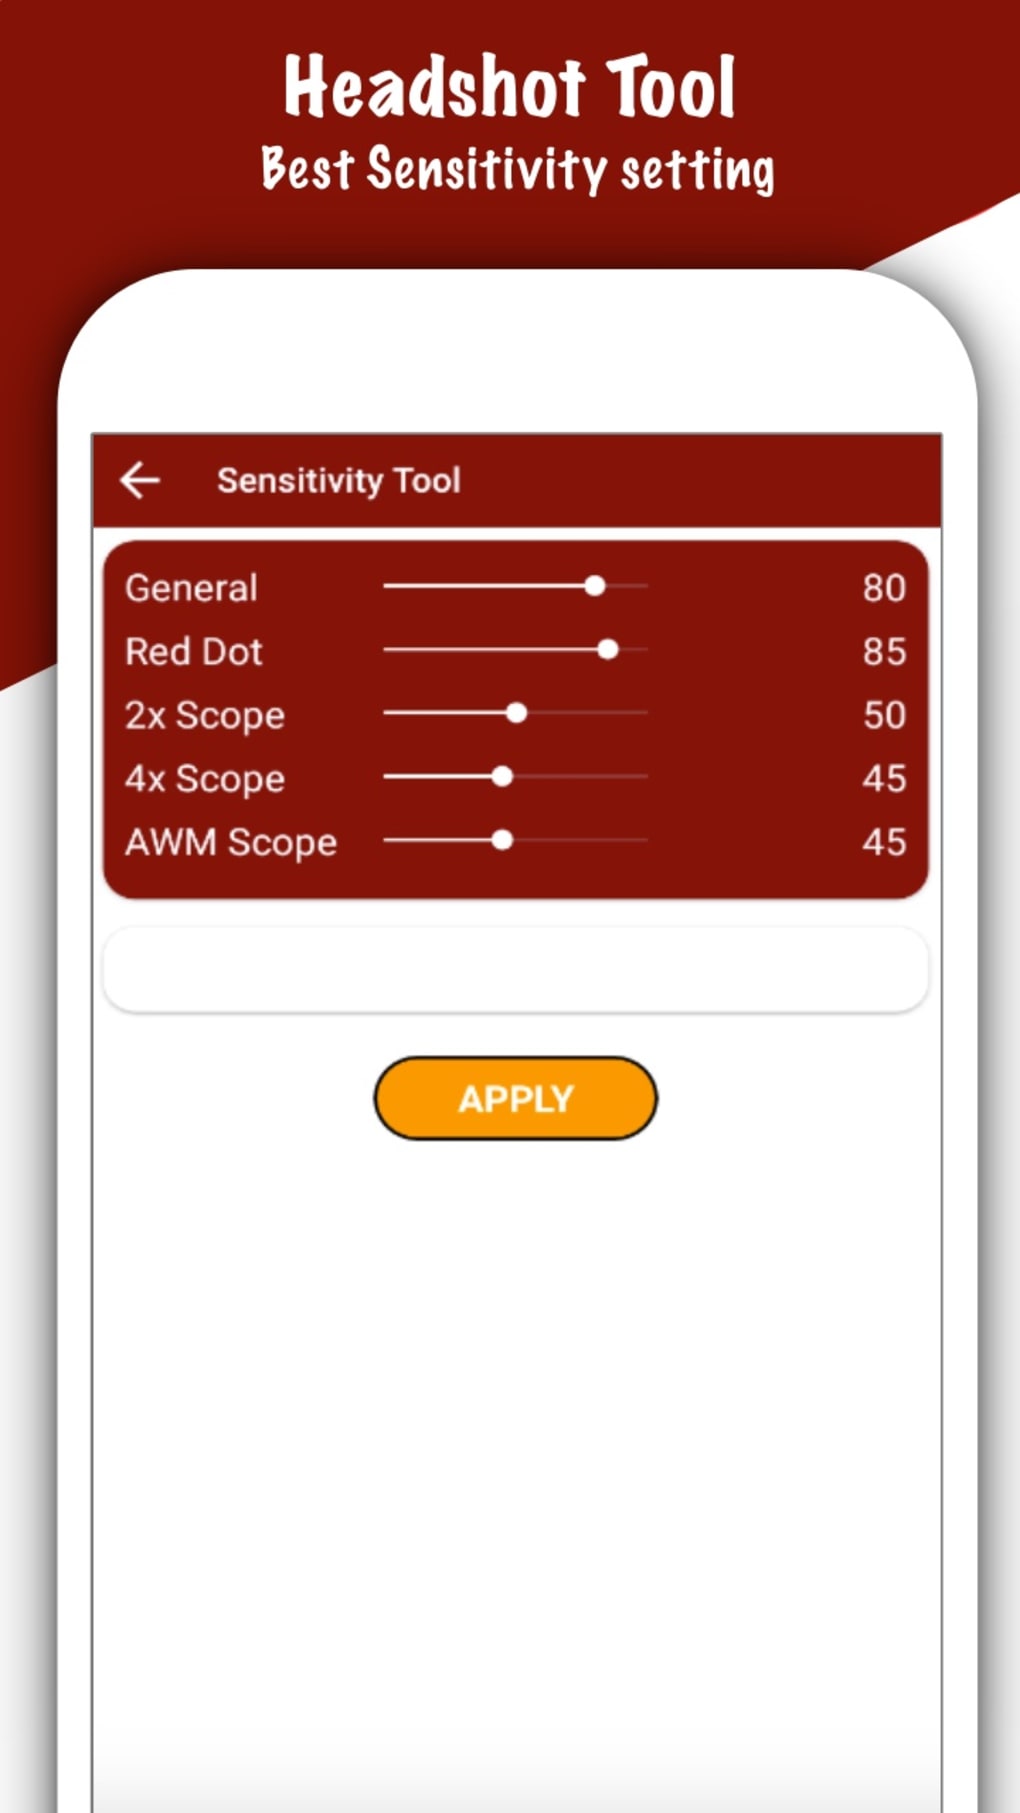 About: Headshot GFX Tool Sensitivity (Google Play version)